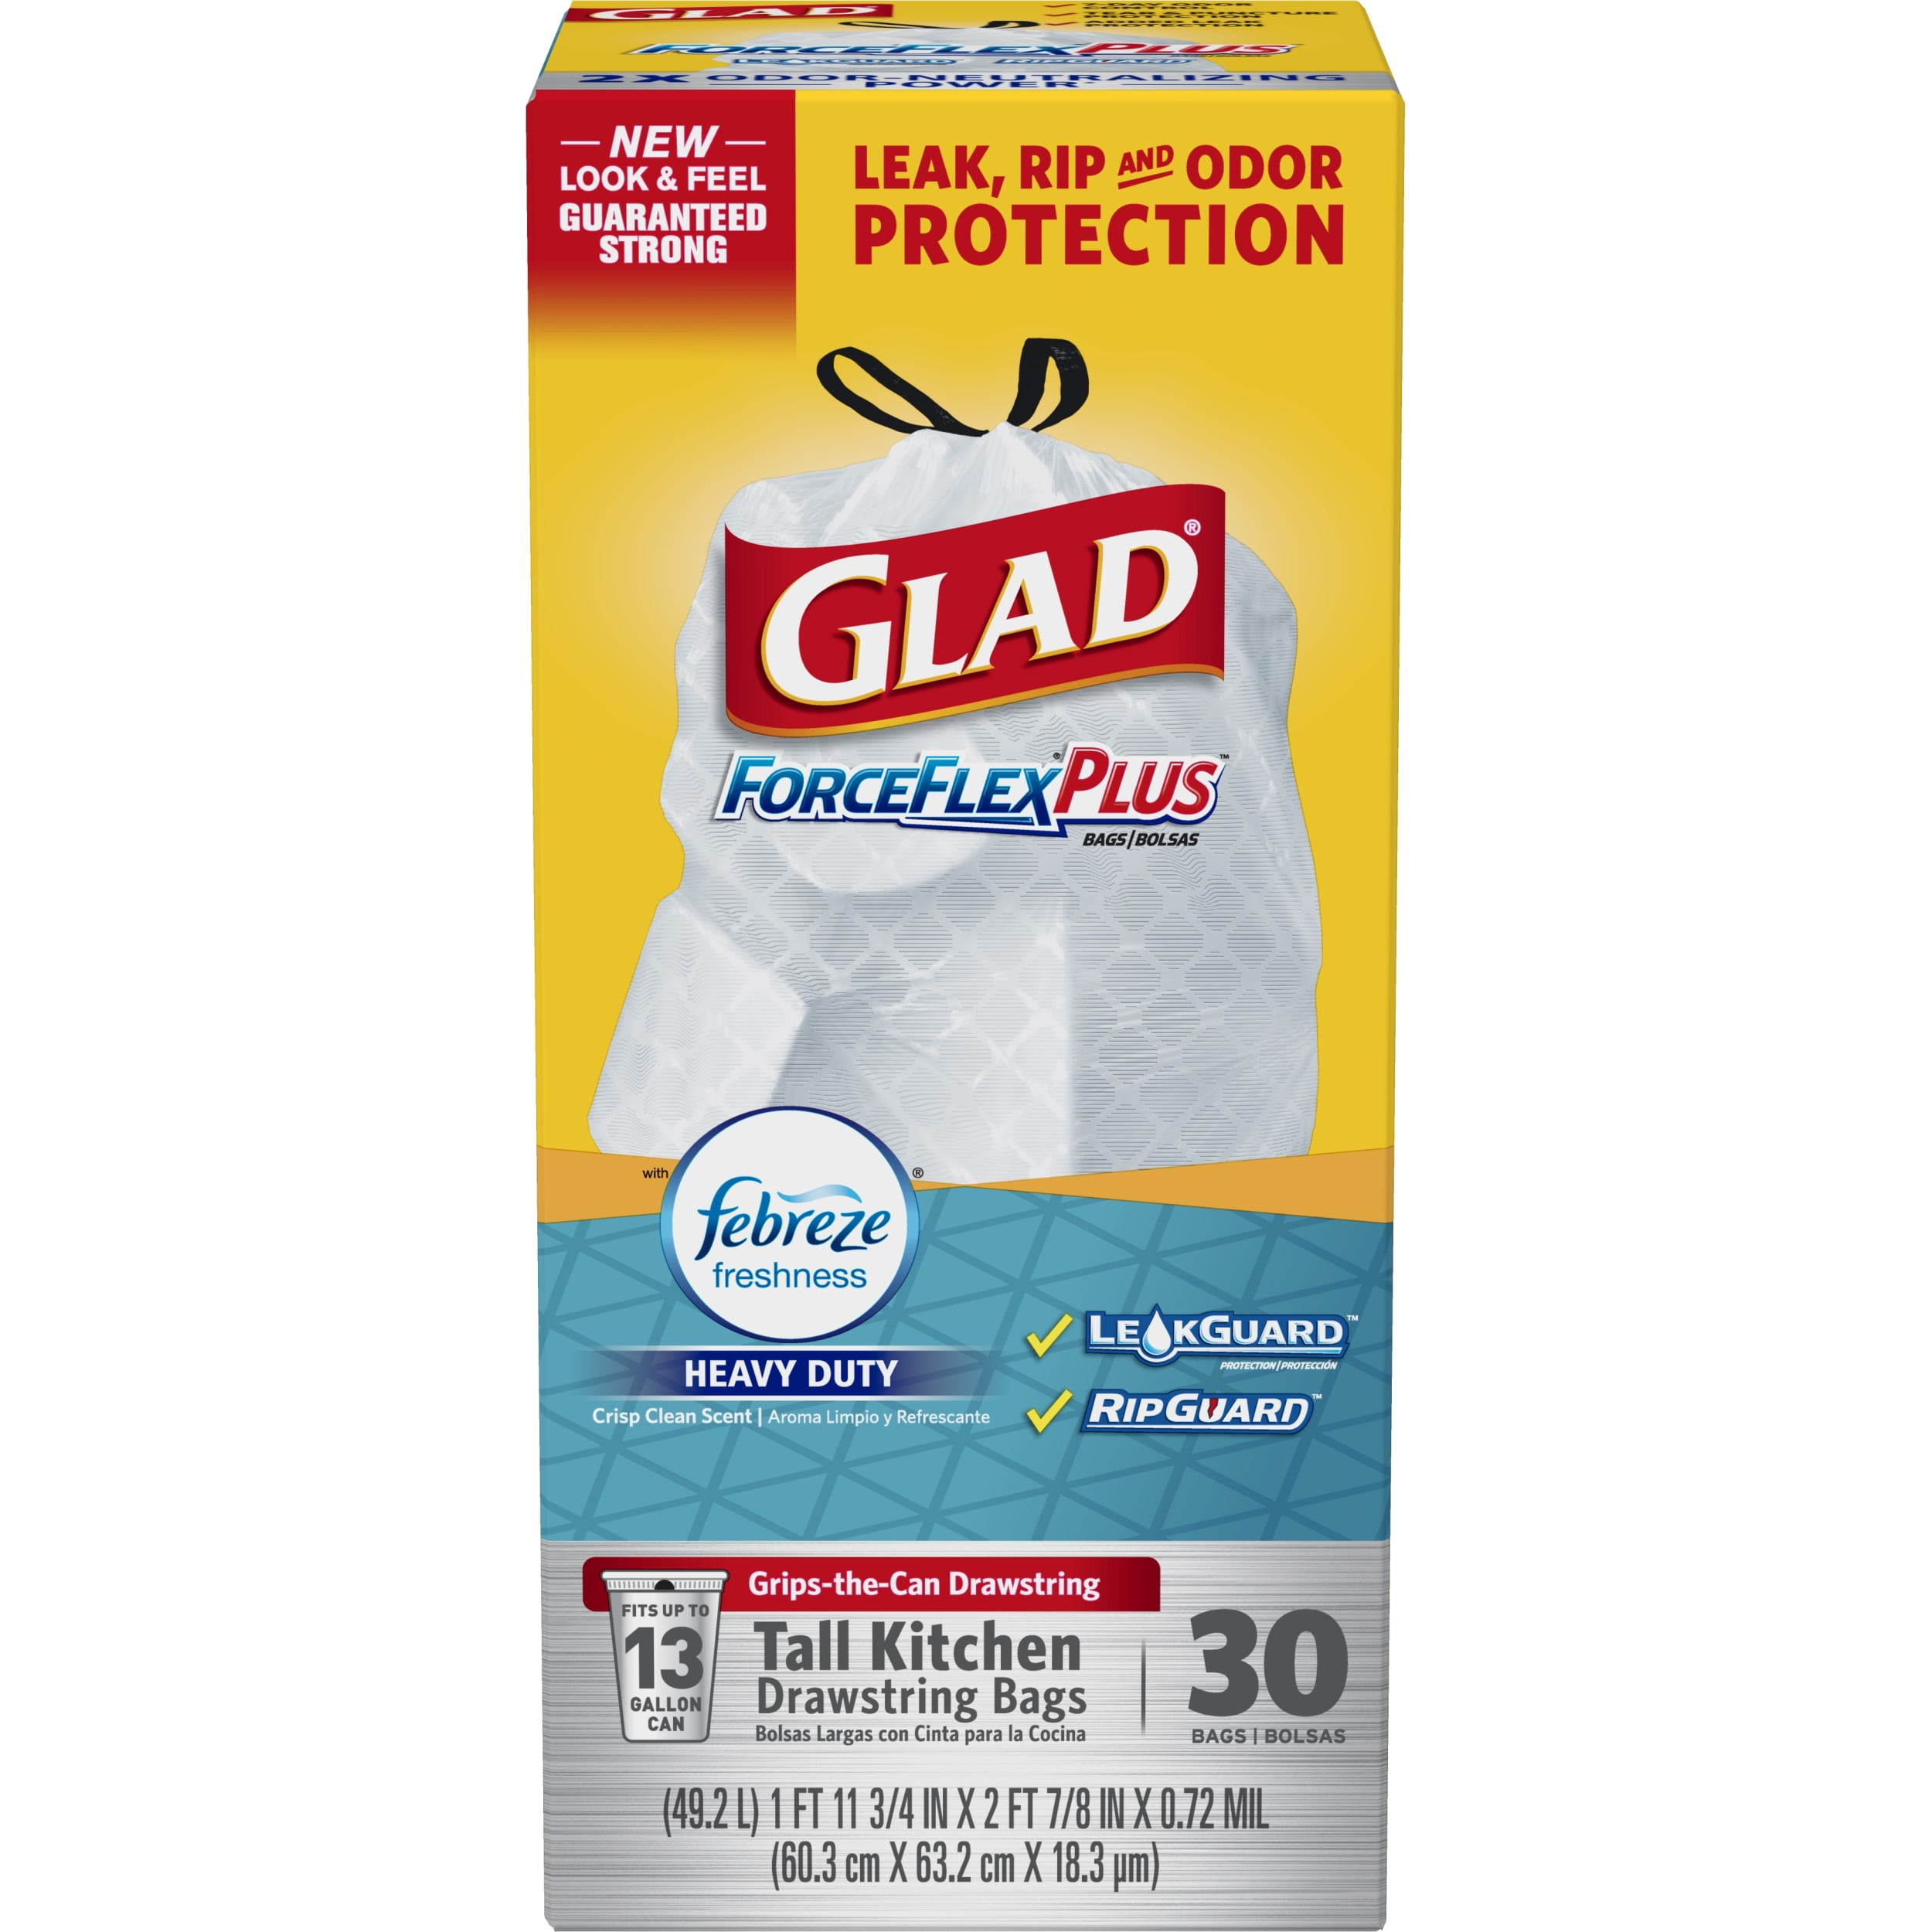 GLAD FORCEFLEX PLUS 32 TALL KITCHEN TRASH BAGS, LEMON SCENT (13 GAL, 120  ct)